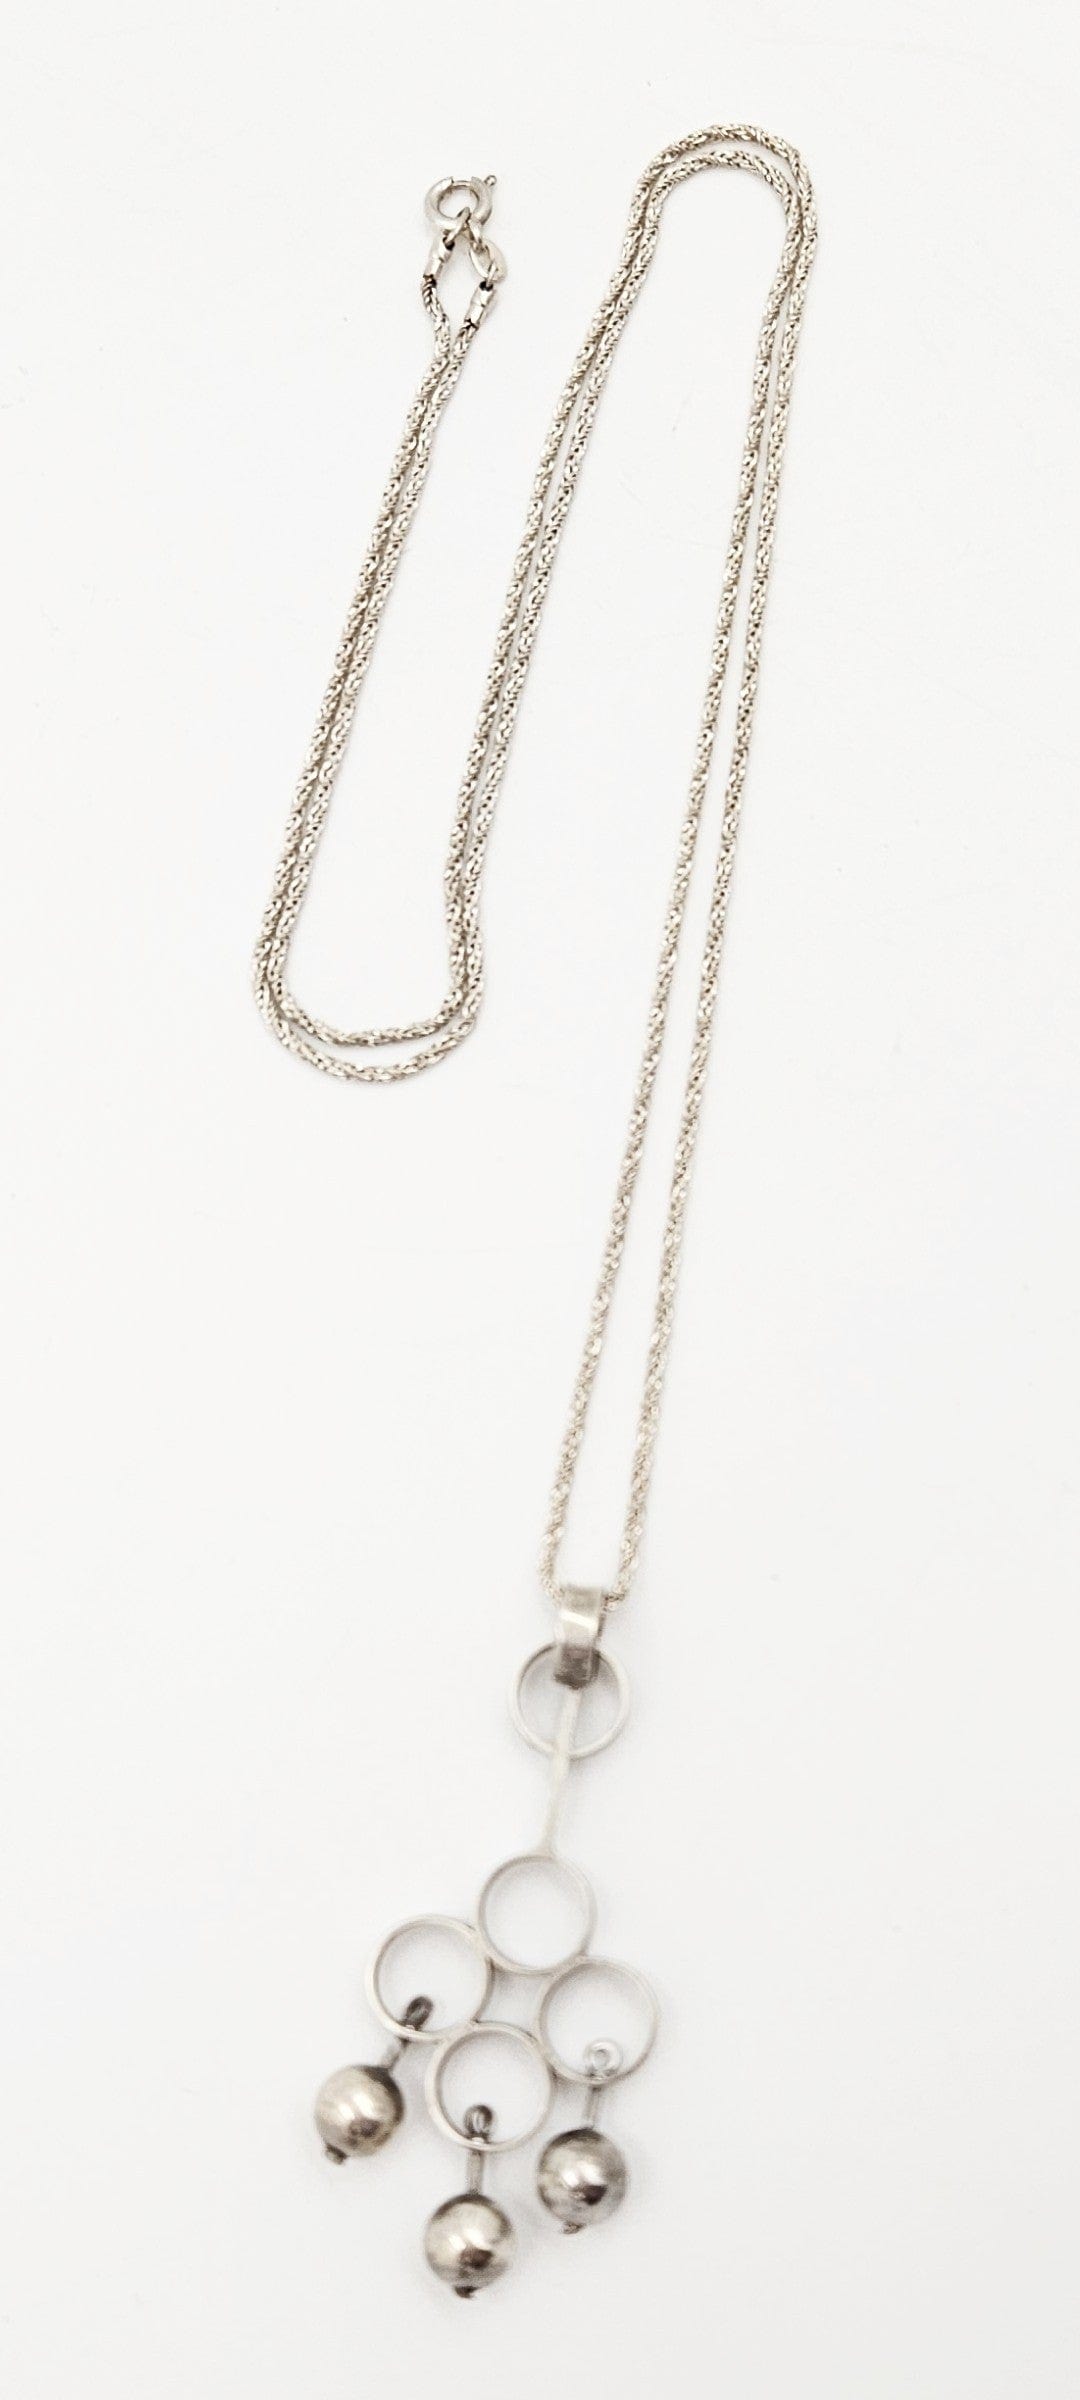 Kupittaan Kulta Jewelry Thune Norway Sterling Silver Modernist Kinetic Sterling Necklace